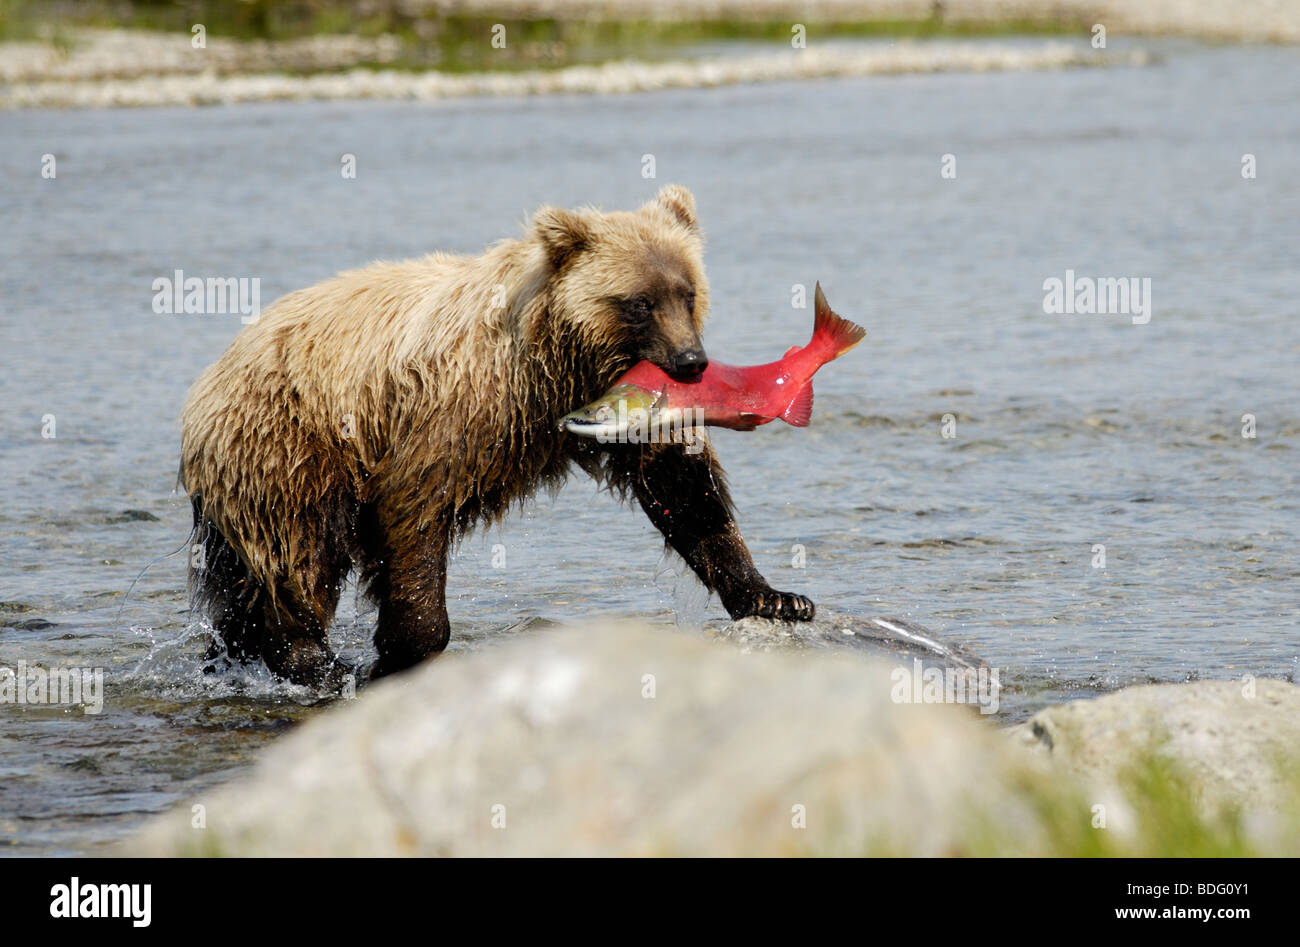 Grizzly bear with fish (salmon) in mouth, Ursus arctos horribilis, Katmai National Park, Alaska Stock Photo